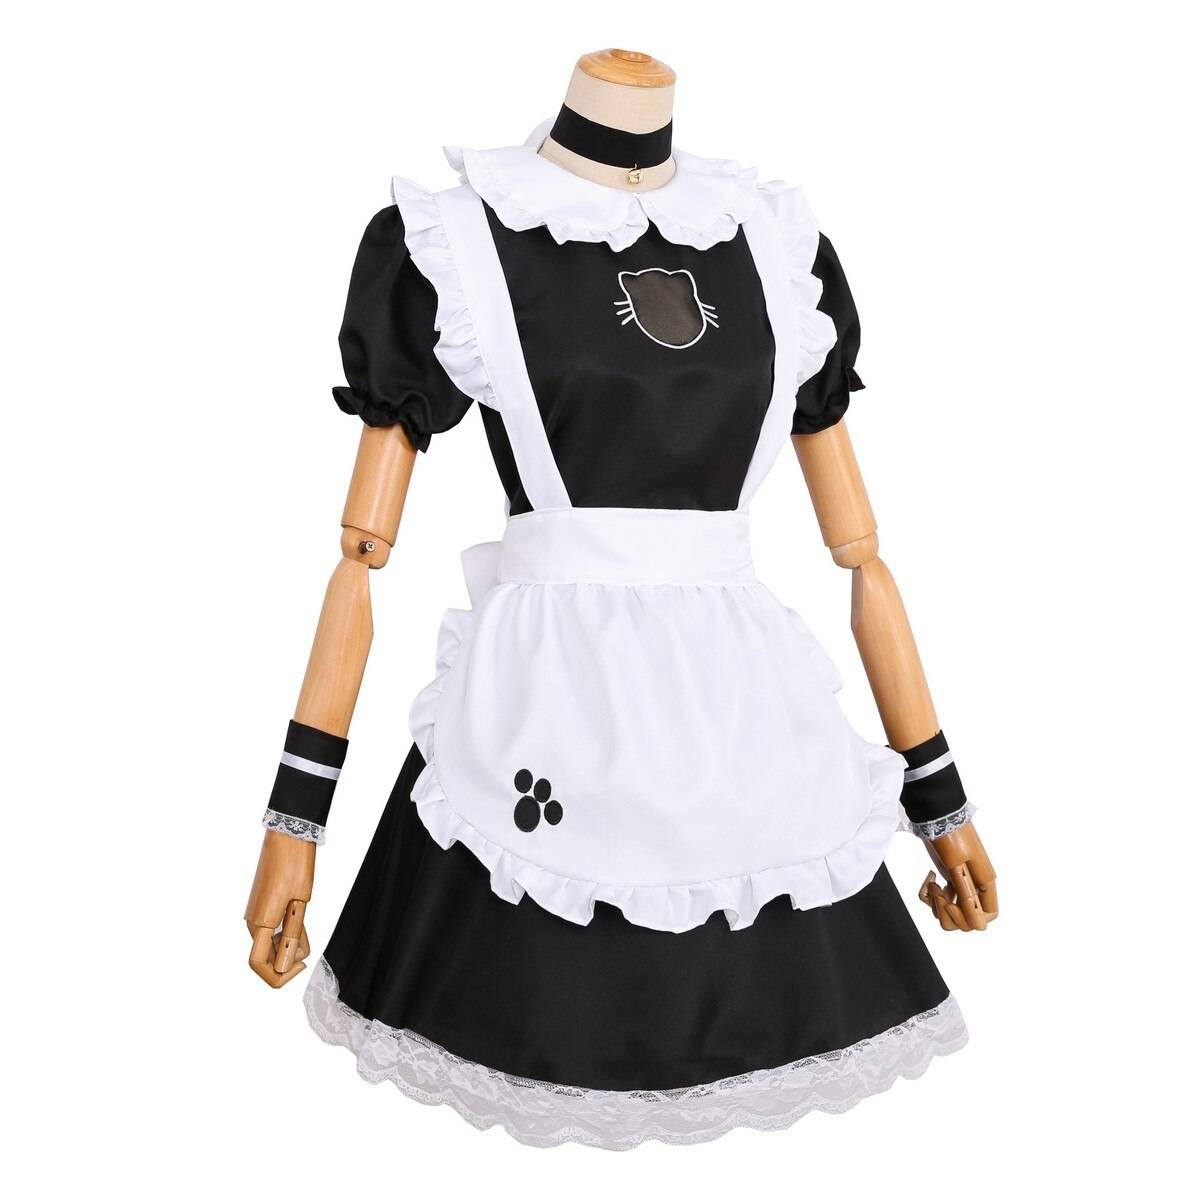 Anime Cat Girl Dress - Kawaii Stop - Adorable, All Dresses, Anime, Cosplay, Costumes, Cute, Dress, Gothic, Halloween, Japanese, Kawaii, Korean, Loli, Lolita, Lolita Dresses, Loveable, Lovely, Maid, Plus Size, Sexy, Sissy, Sweet, Uniform, Women's Clothing &amp; Accessories